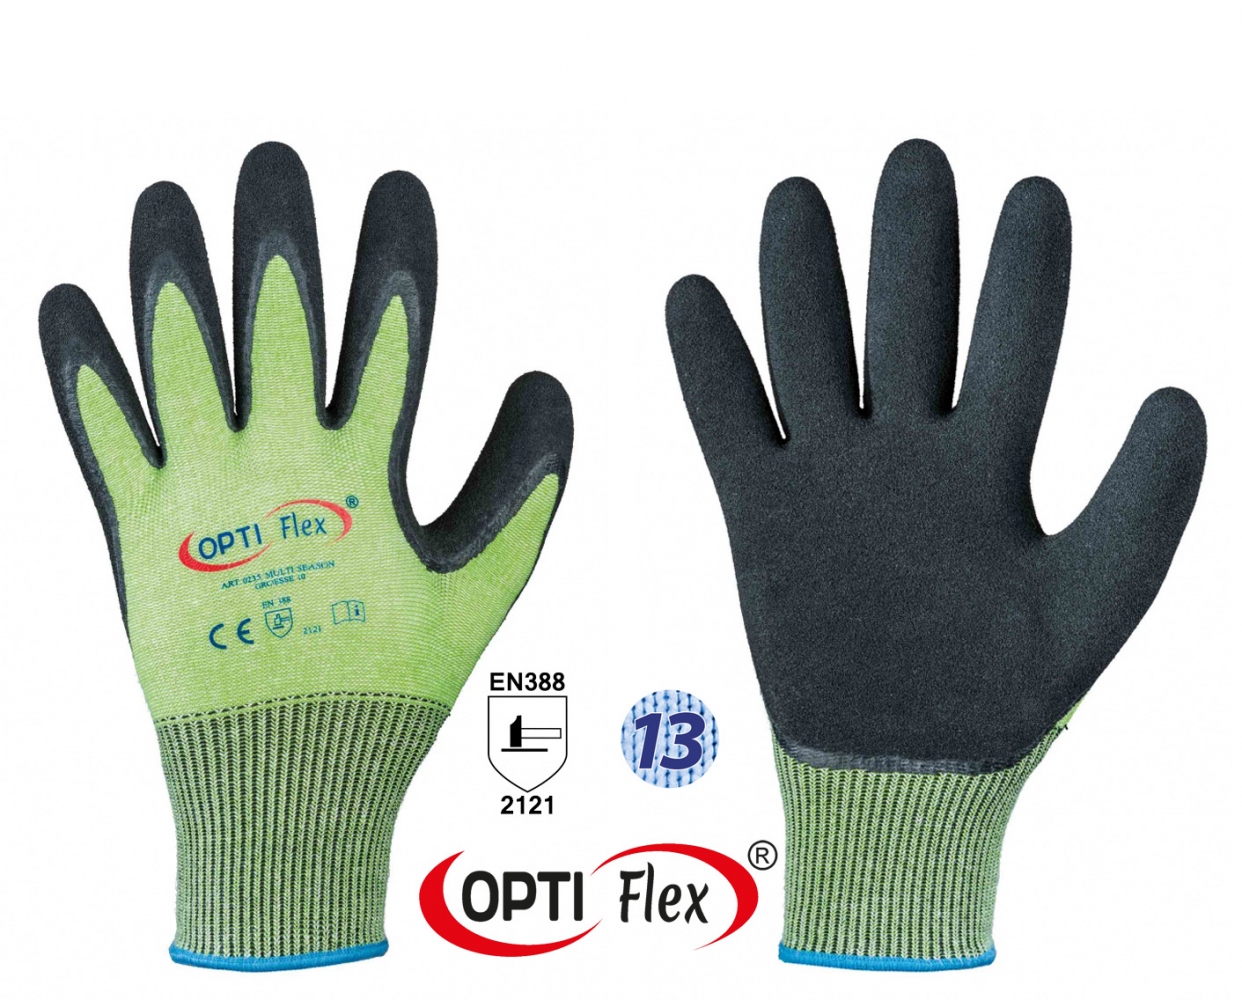 pics/Feldtmann 2016/Handschutz/optiflex-0235-multi-season-perfect-protective-gloves.jpg